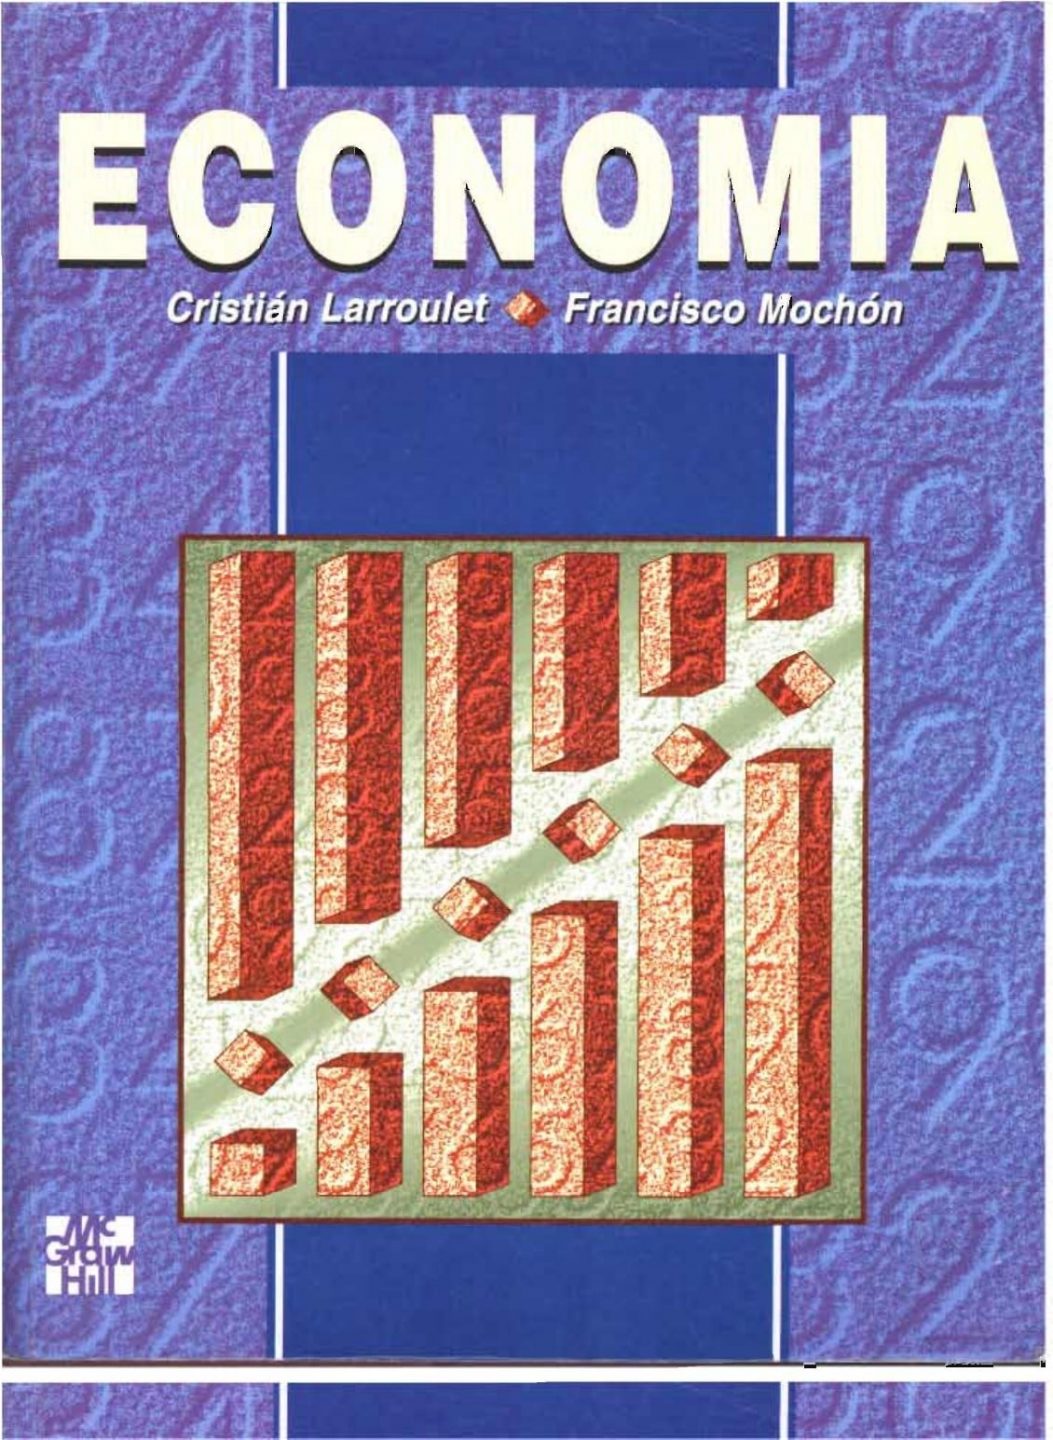 economia basica francisco mochon pdf